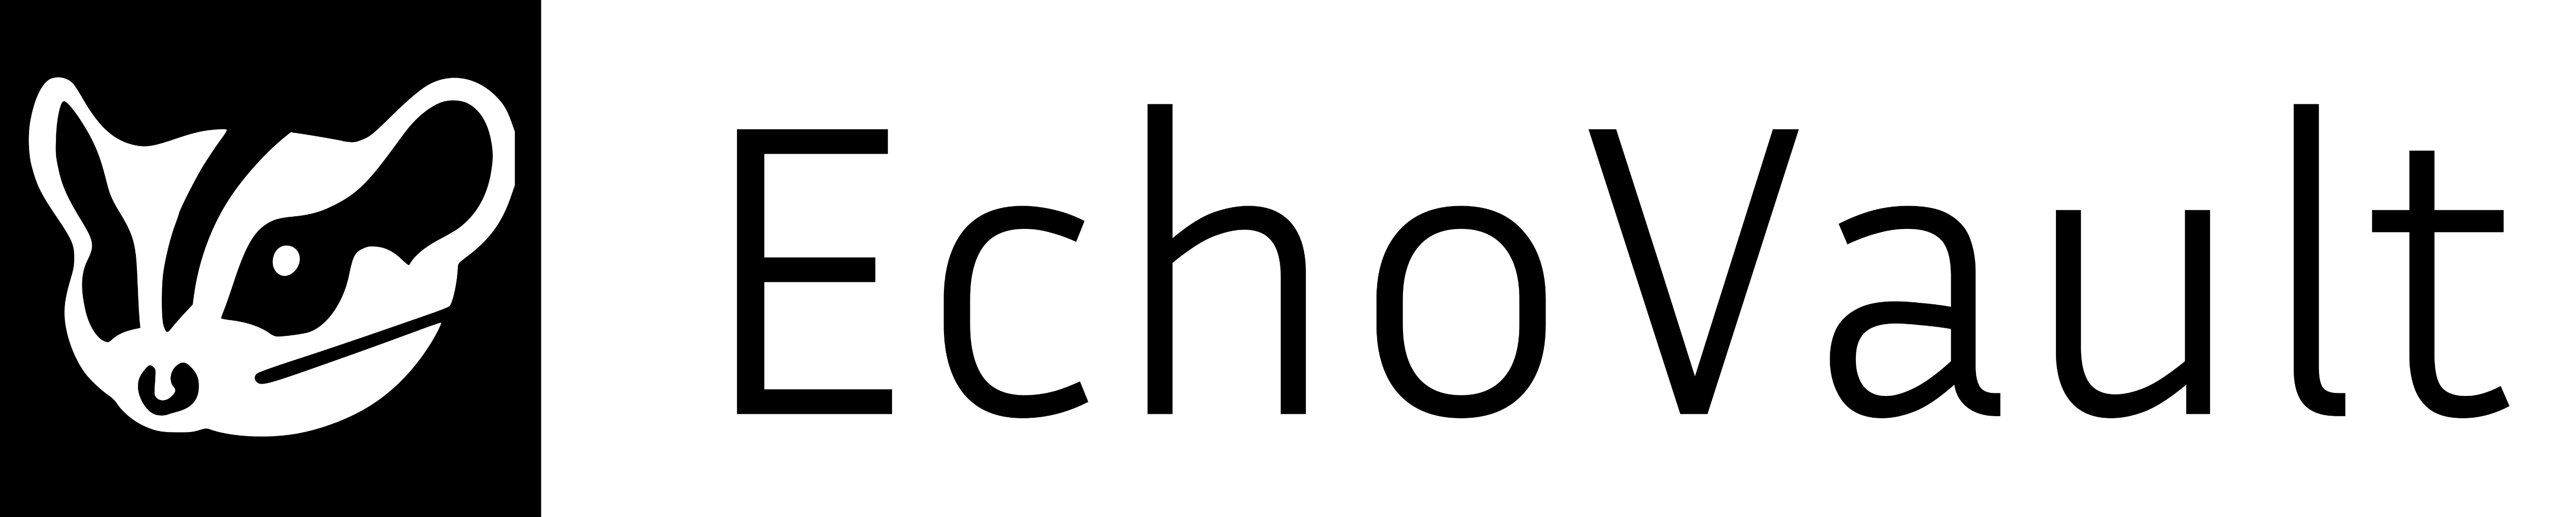 echovault_logo